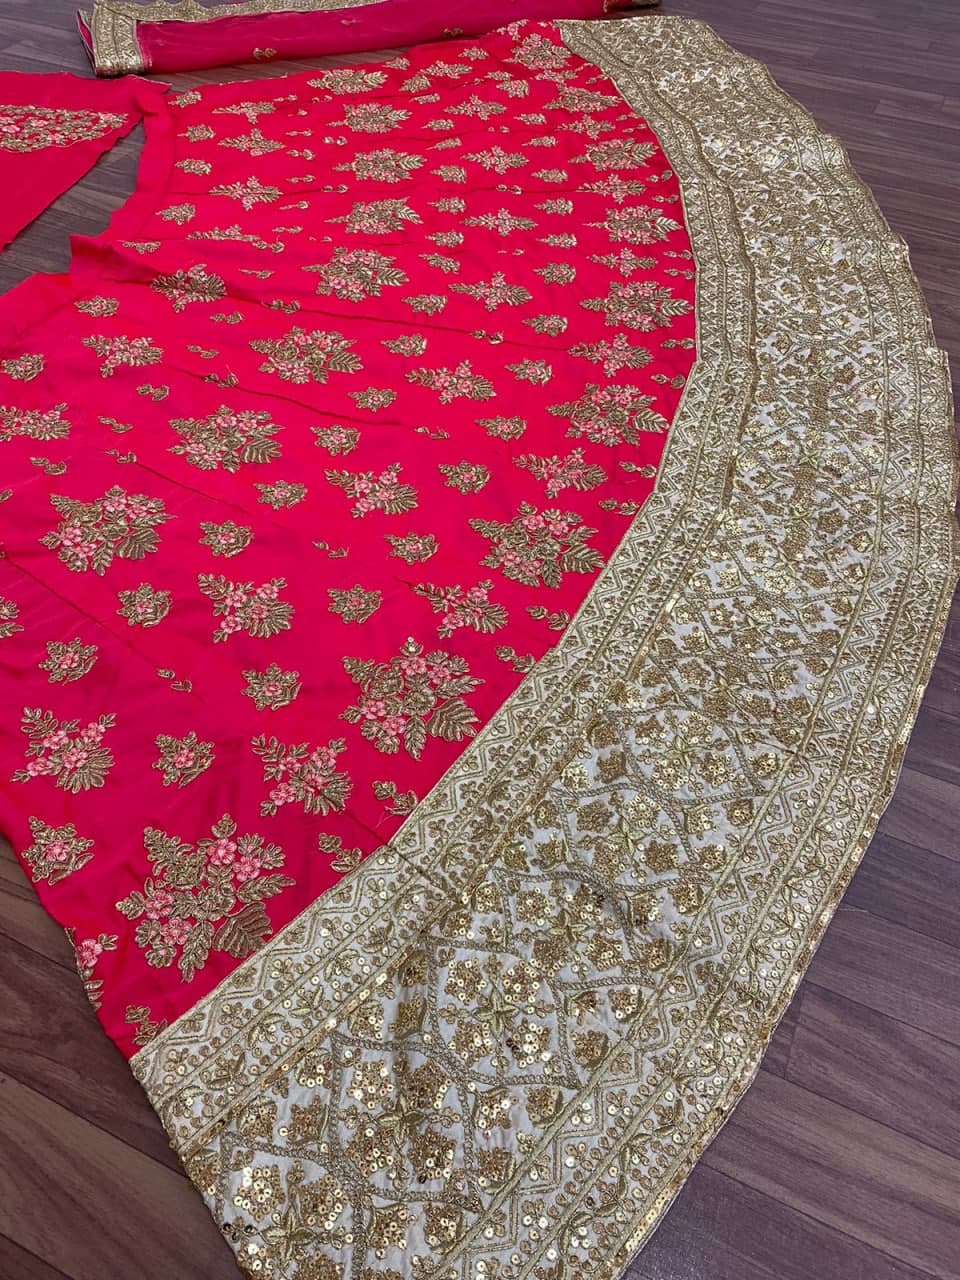 Red Lehenga Choli In Malai Satin Silk With 5 MM Sequence Work